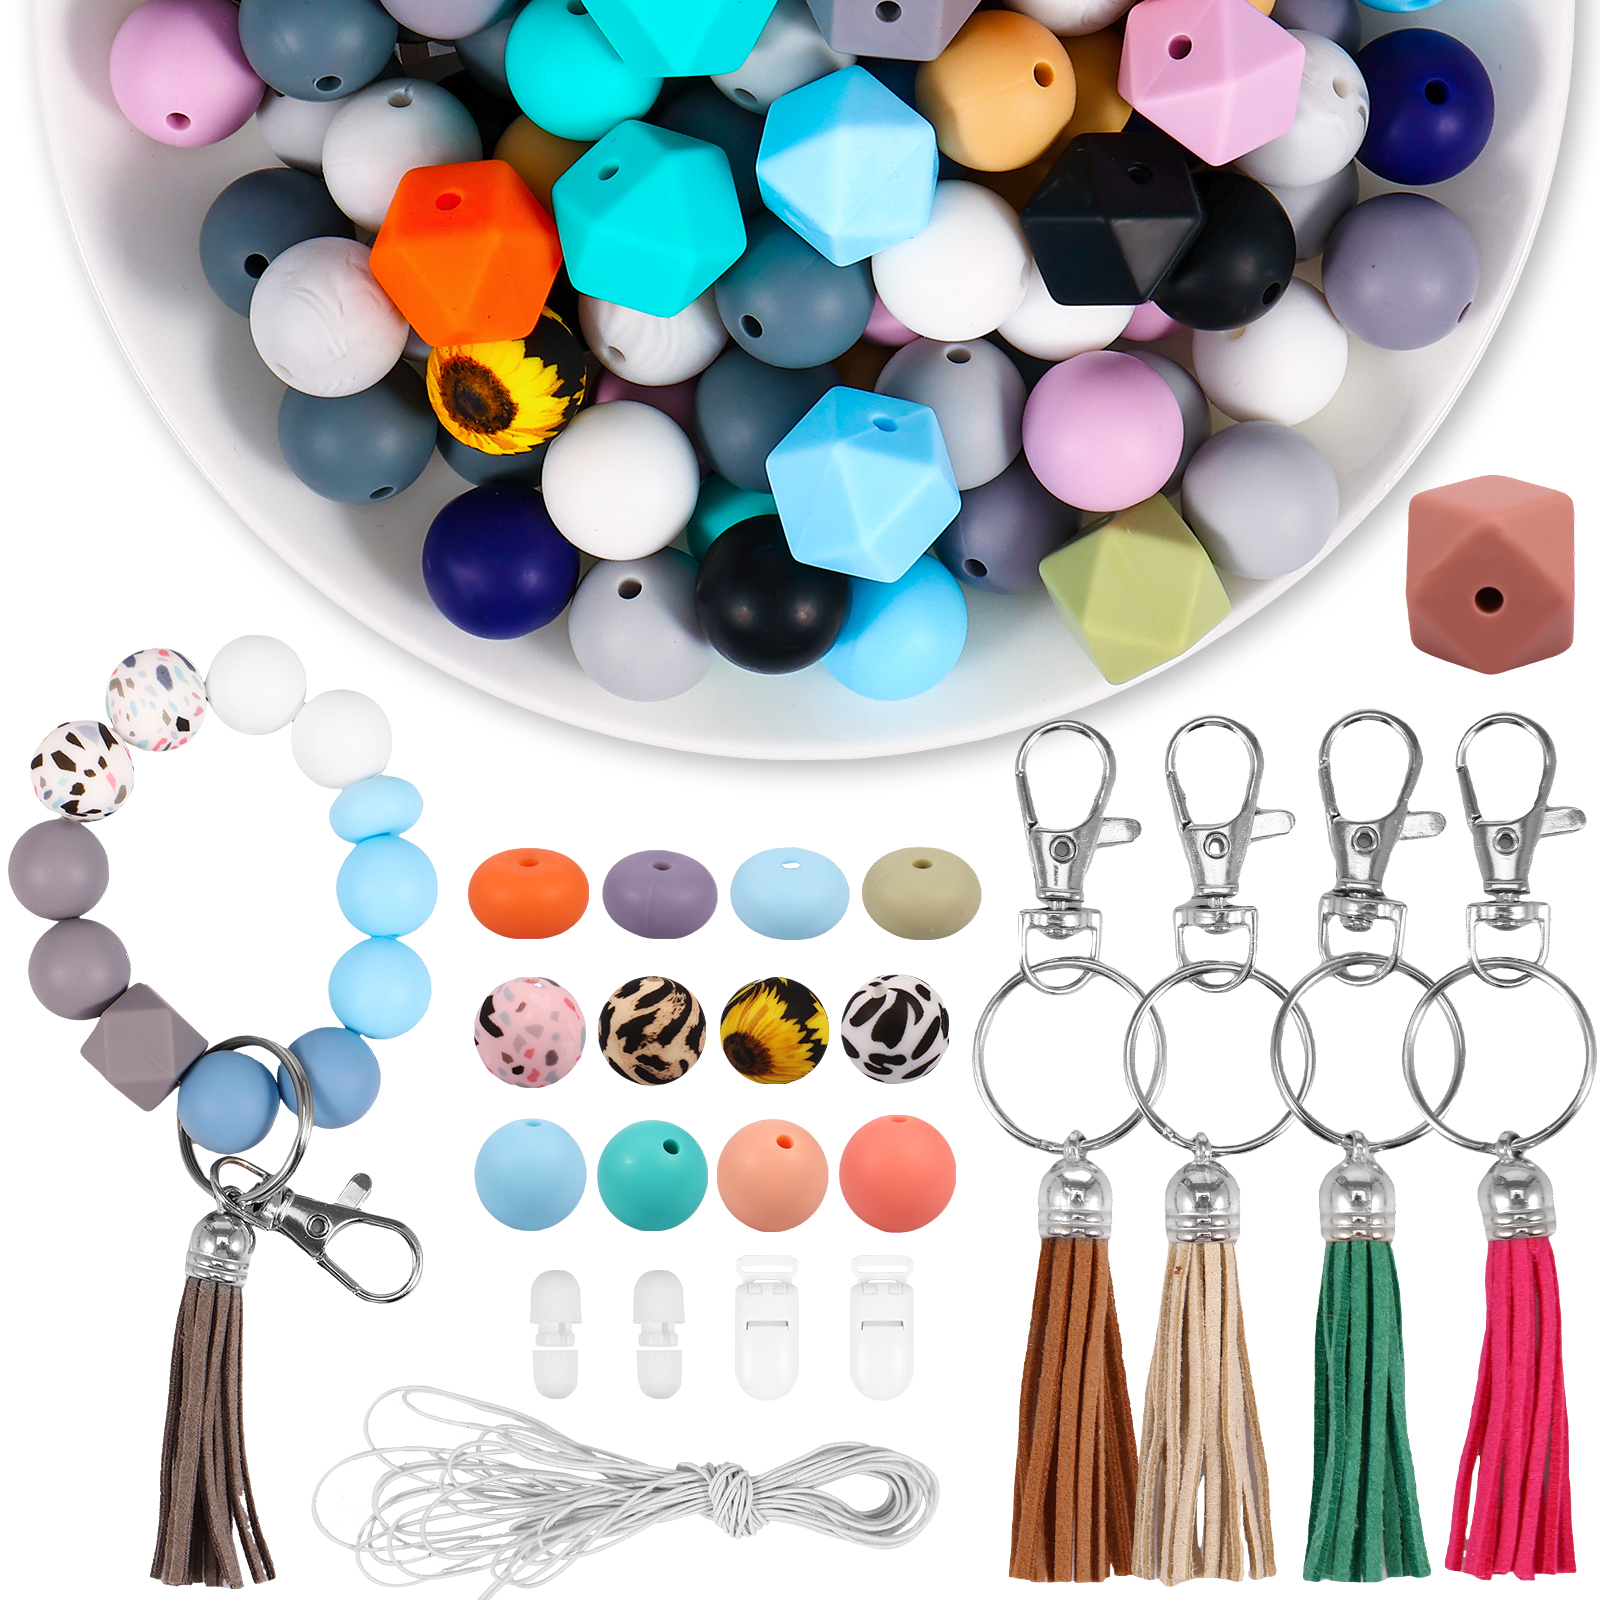 Sesaver Silicone Beads for Keychain Making,Bracelet Making Kit Beads,235Pcs Multiple Styles and Shapes Silicone Beads Bulk Rubber Beads for Keychains